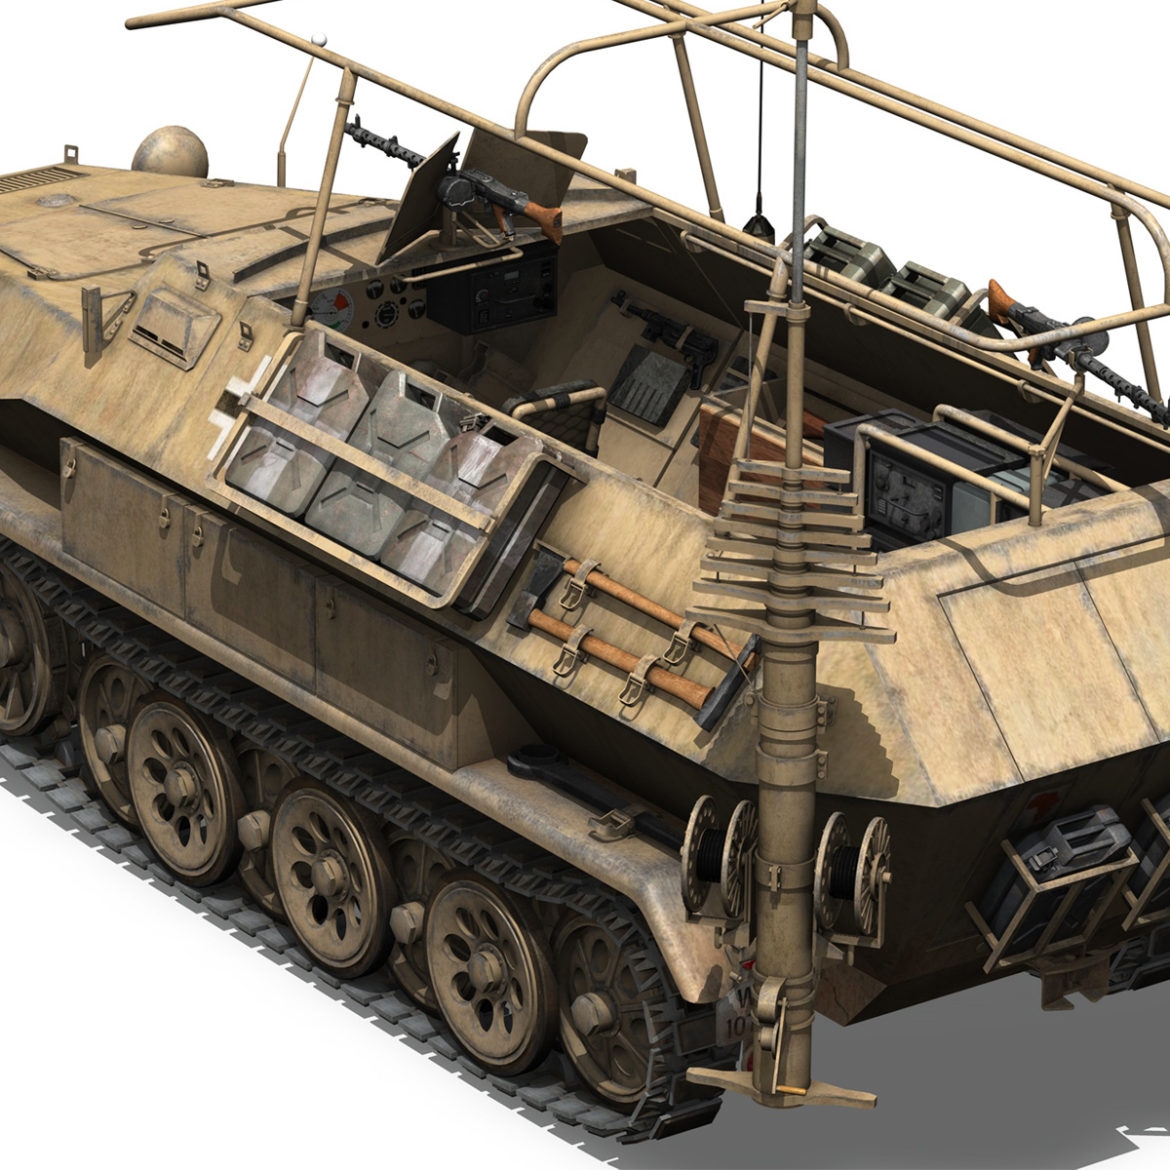 sdkfz 251 ausf.b – communications vehicle – 15pd 3d model 3ds fbx lwo lw lws obj c4d 305995